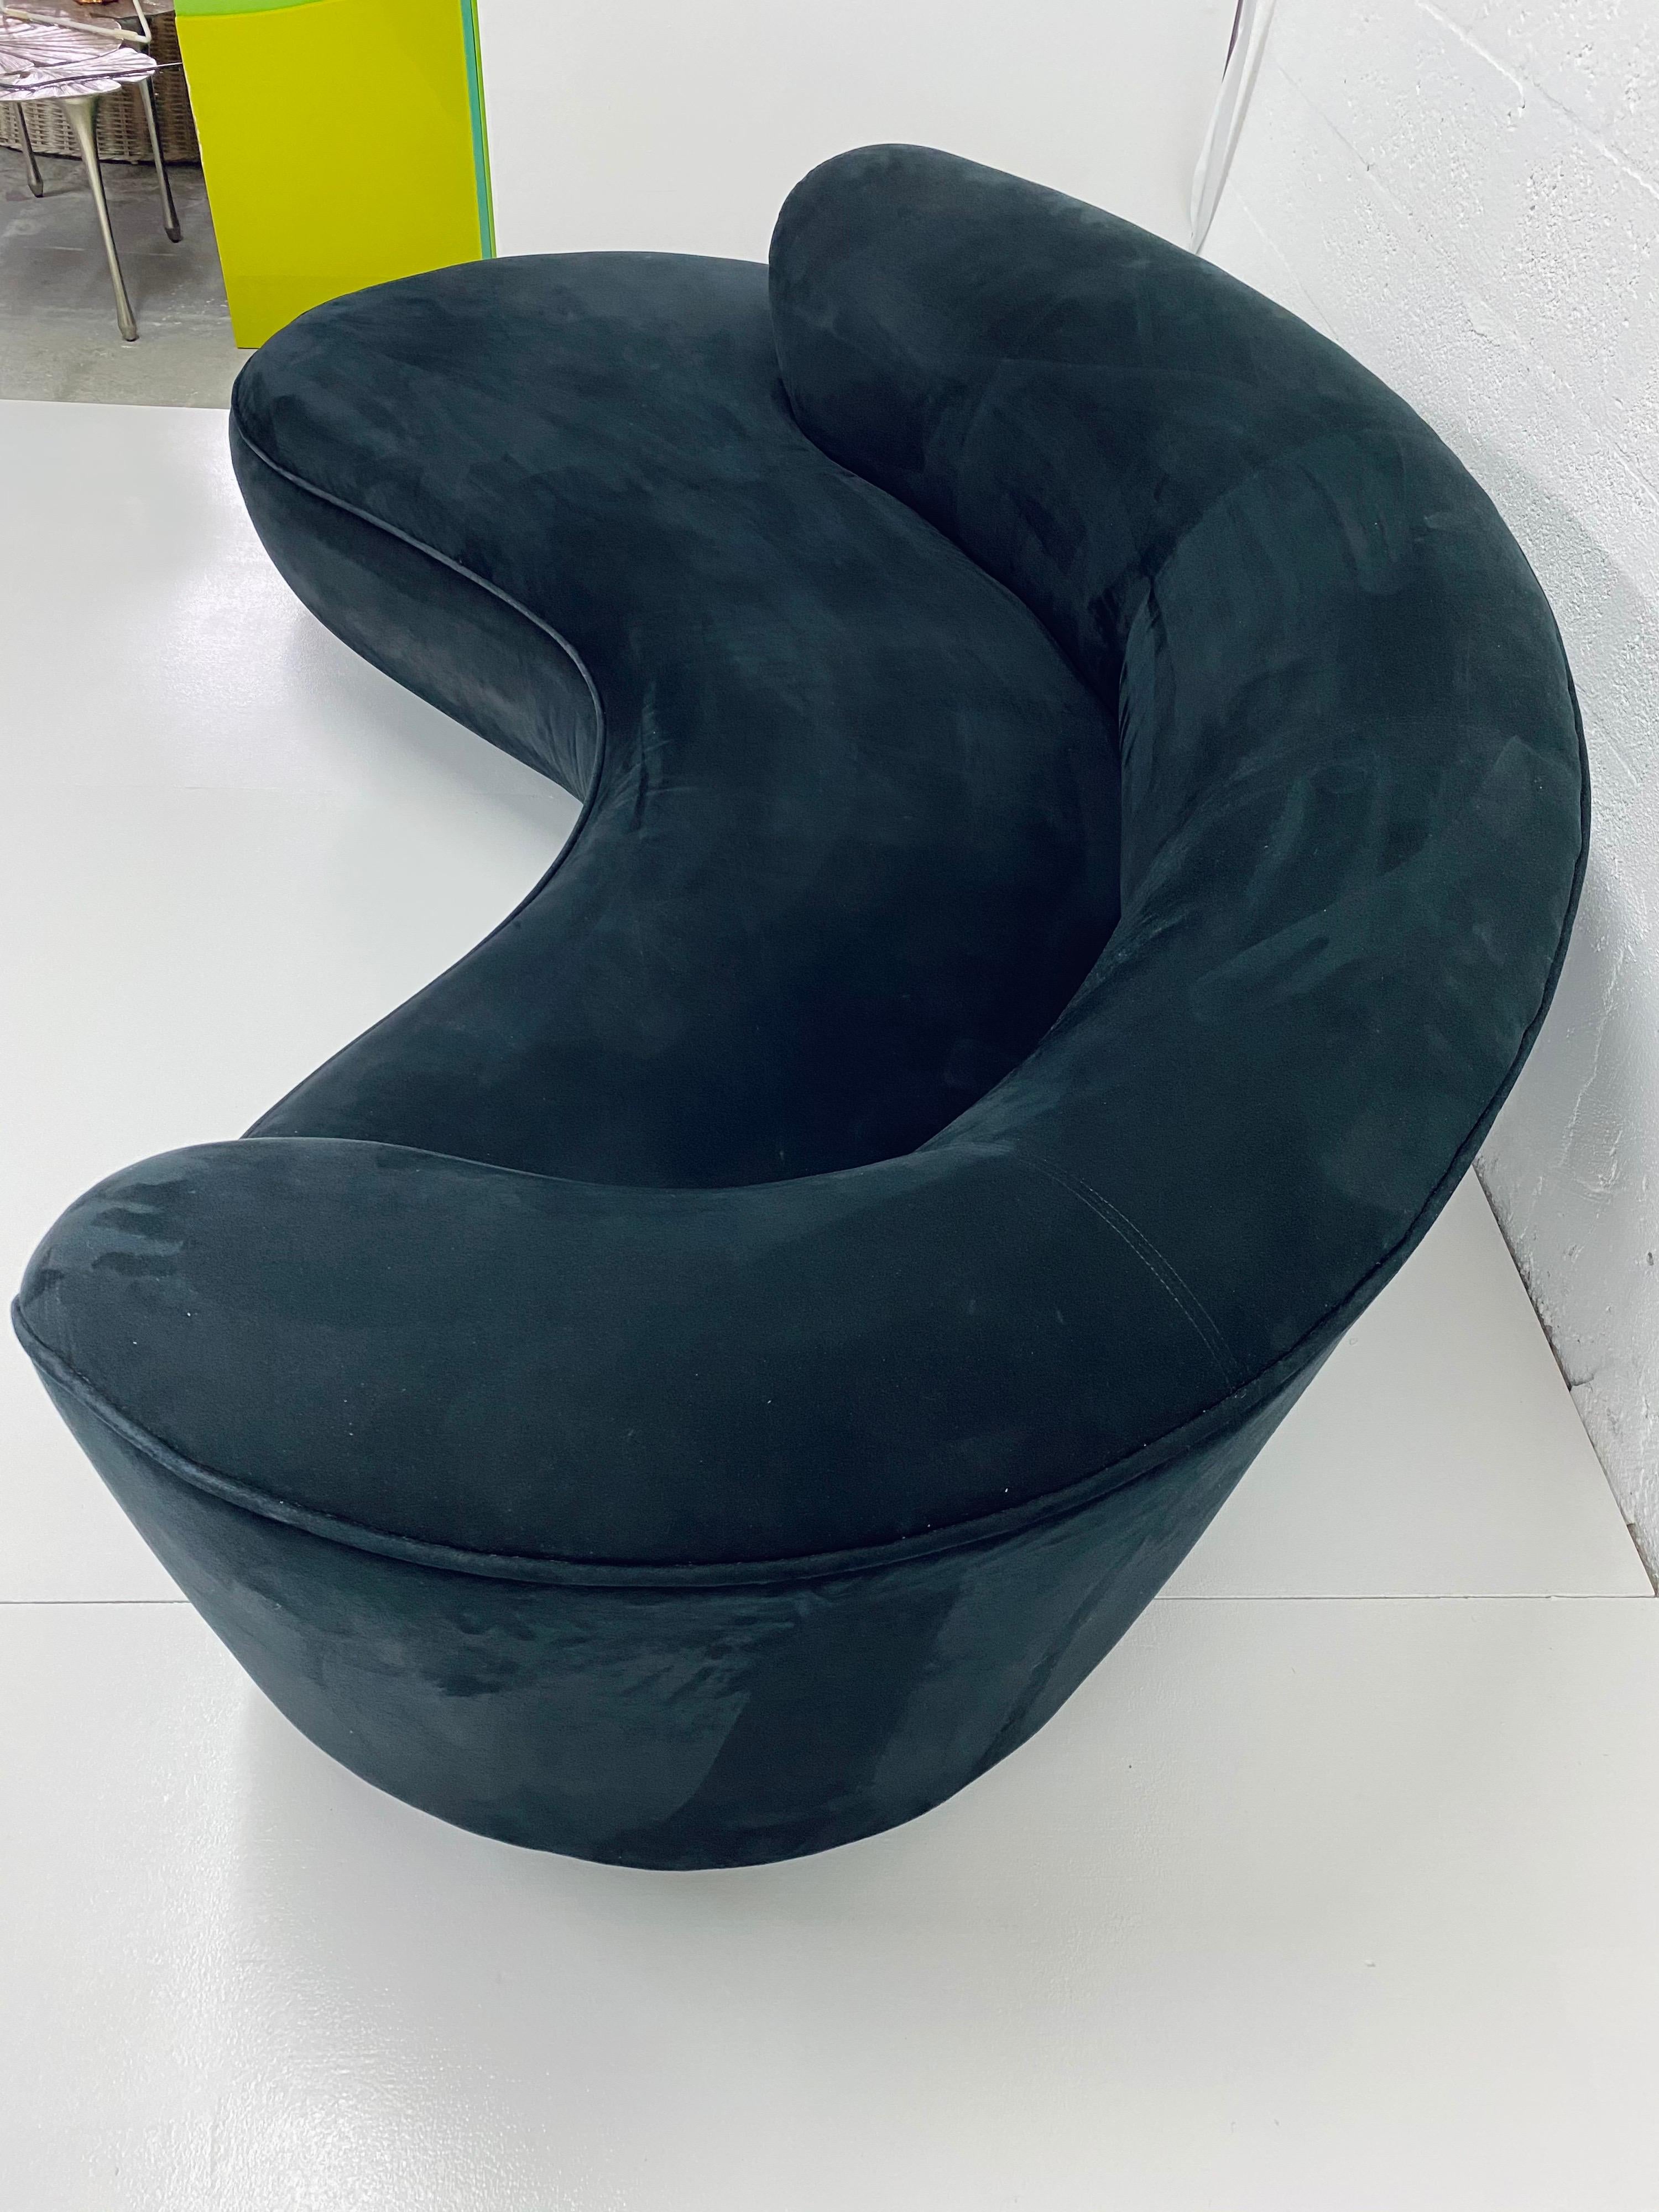 American Vladimir Kagan Curved Serpentine Sofa for Directional